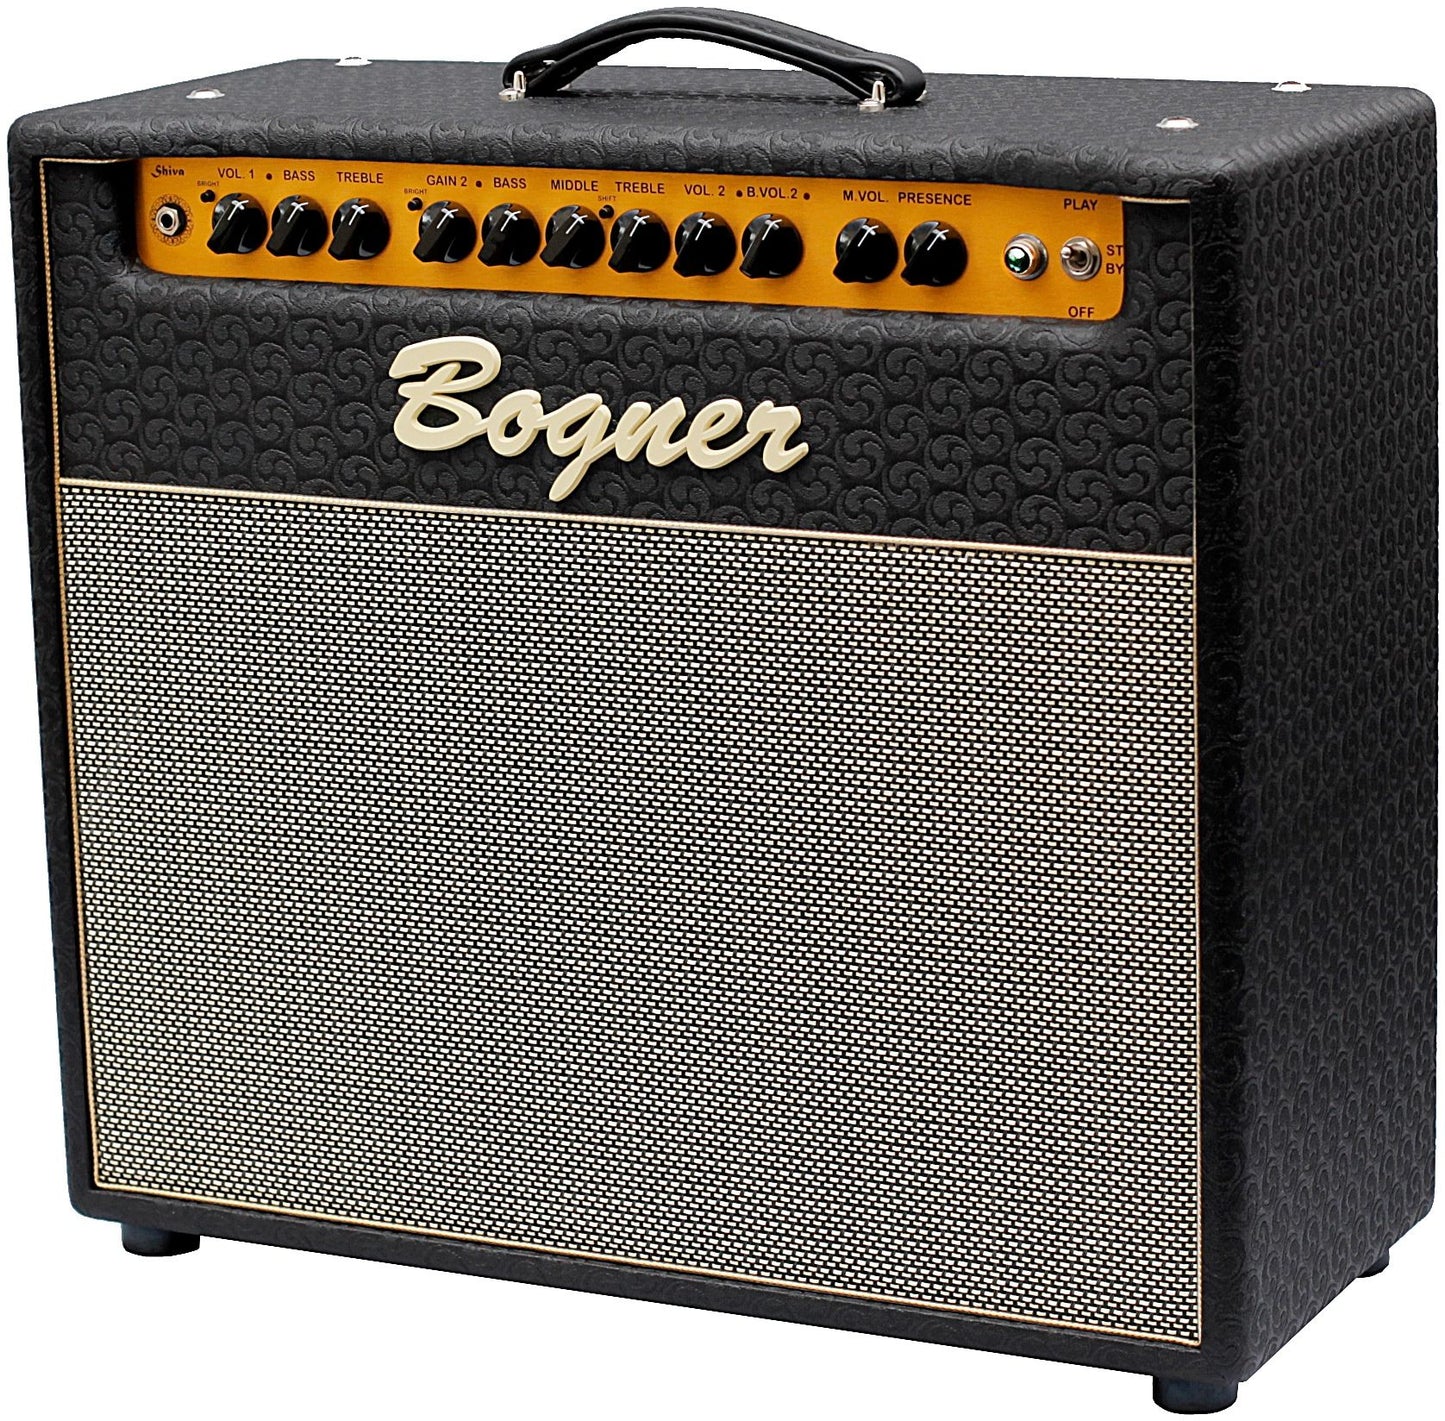 Bogner Shiva 1x12 Combo Guitar Amplifier with Reverb & EL34